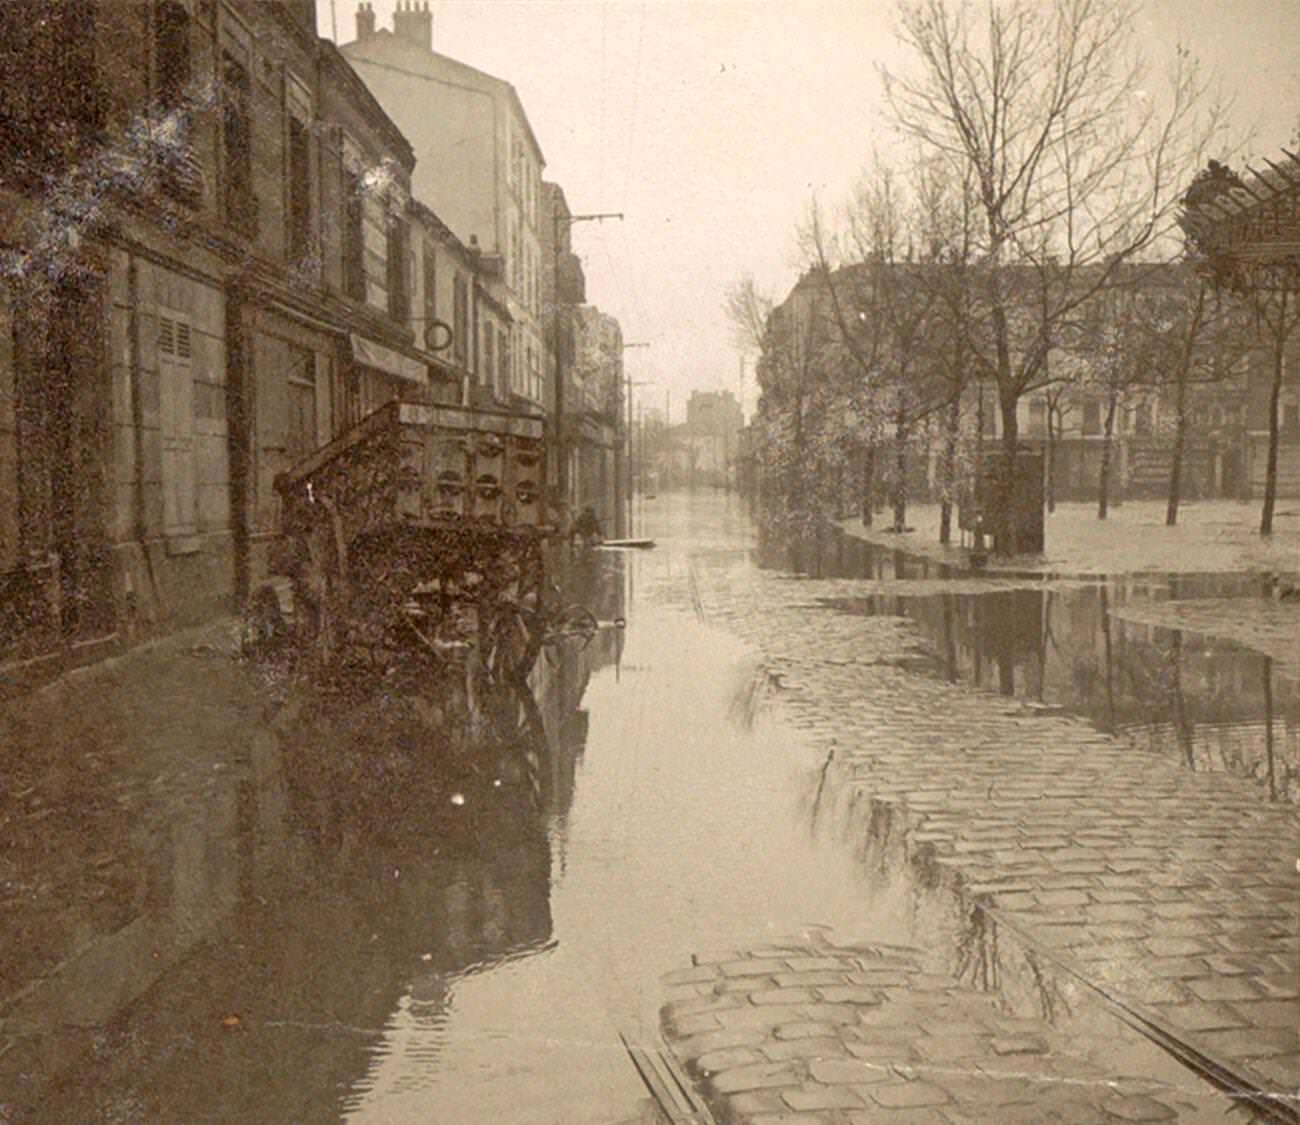 Car in flooded street during Paris flood, 1910.